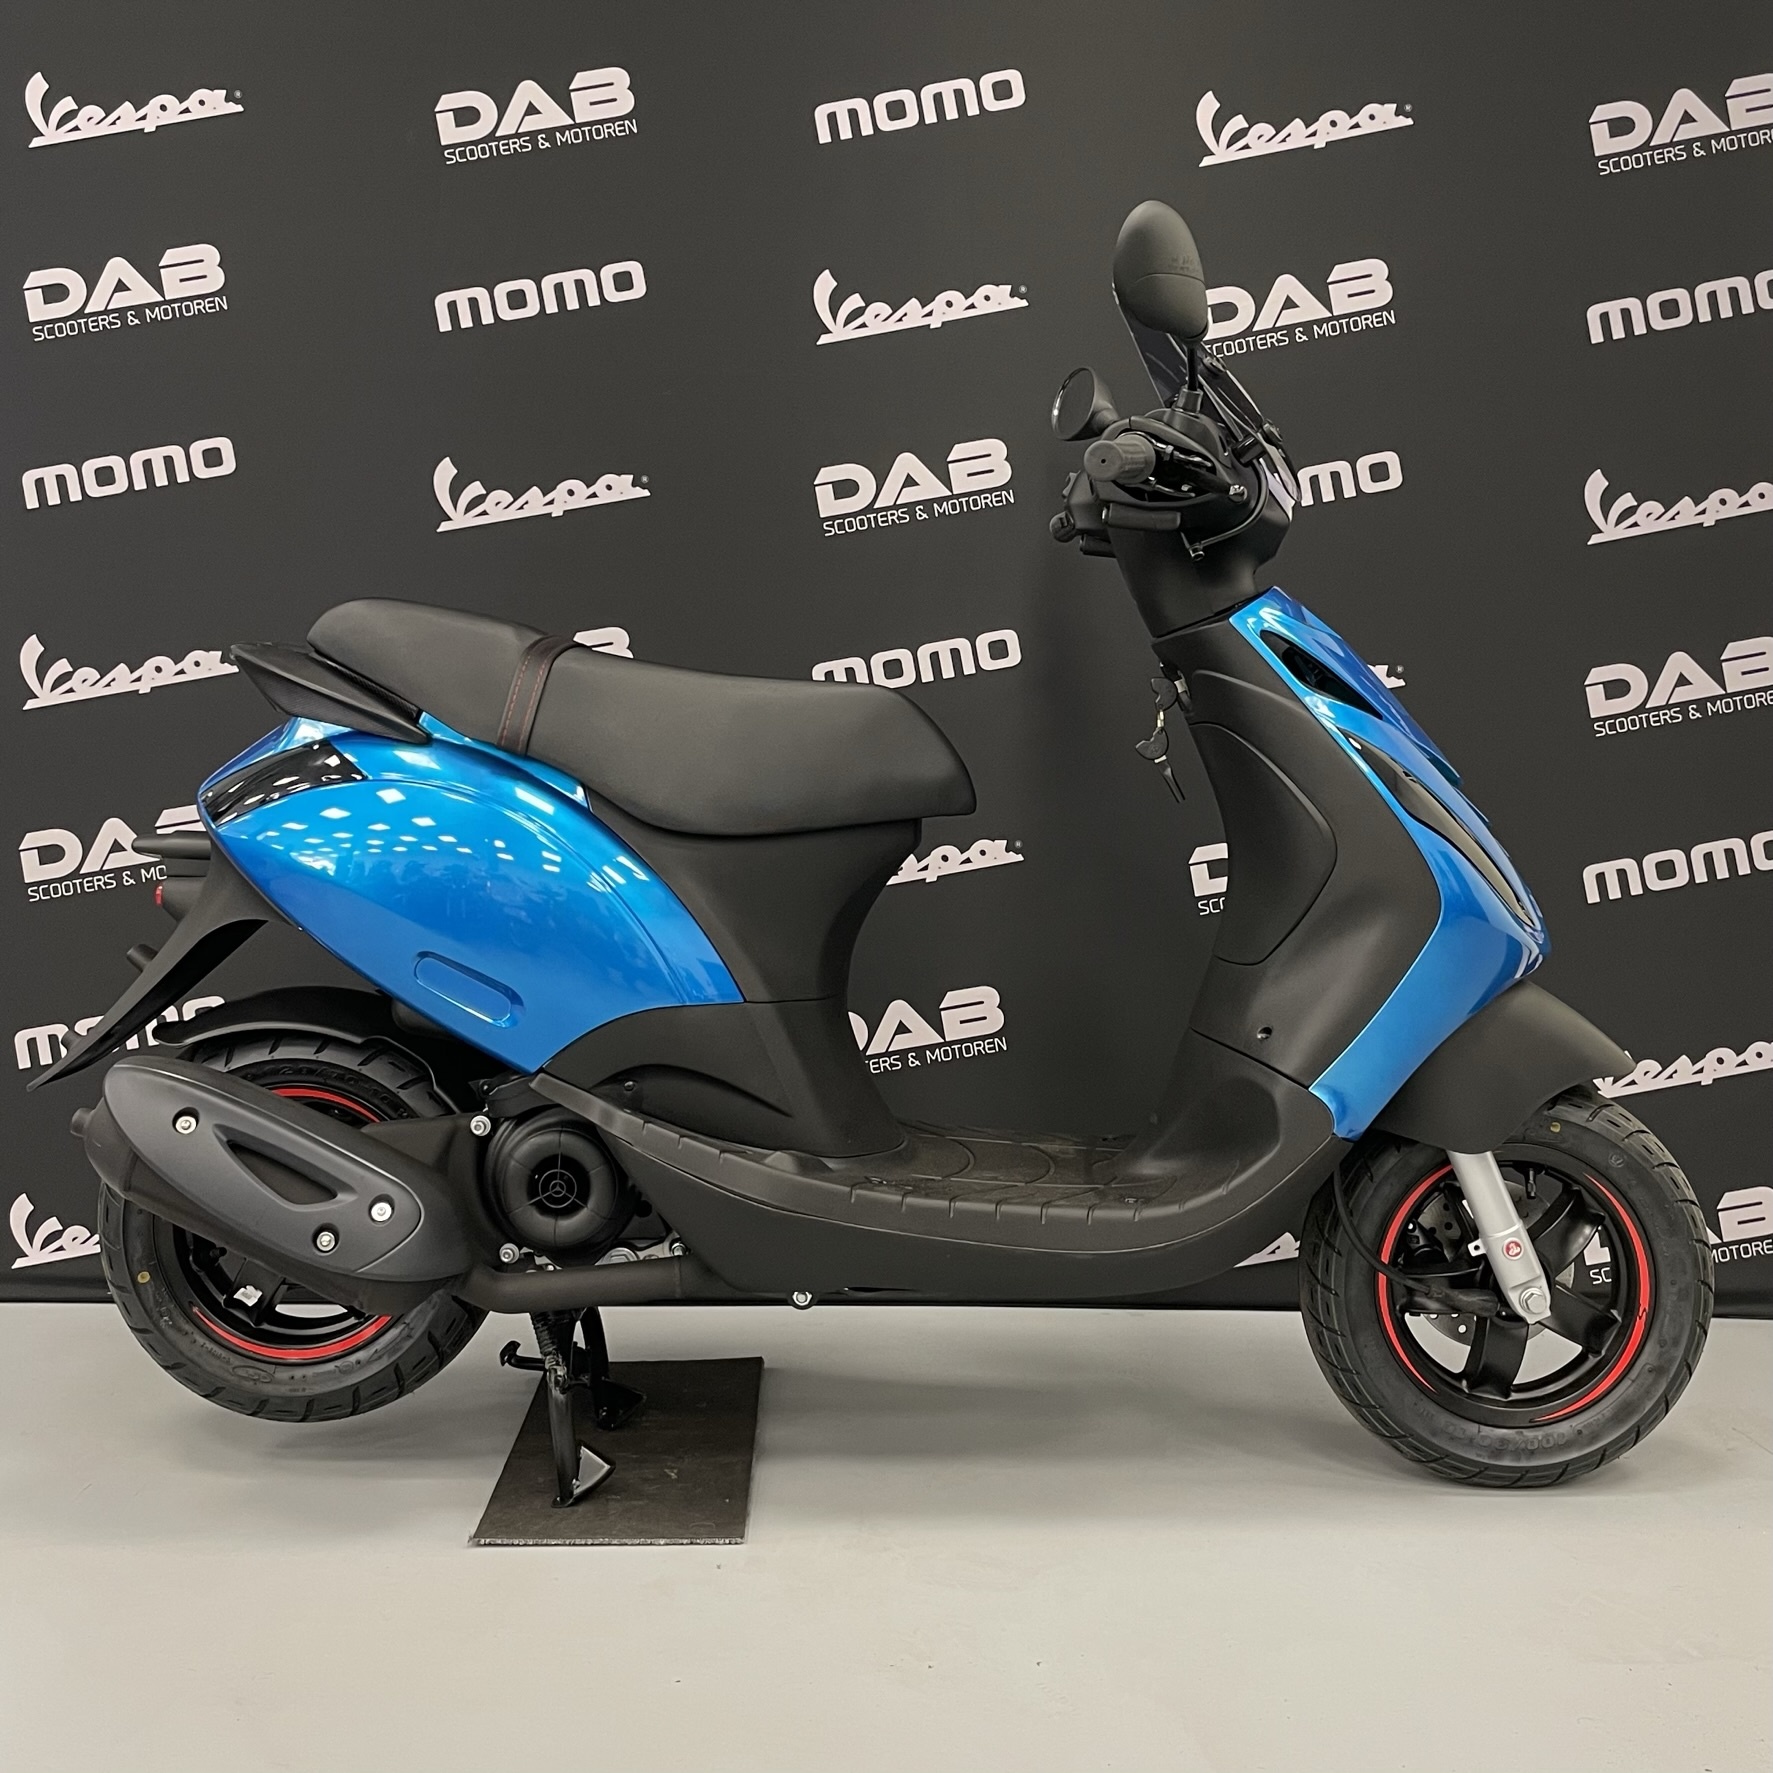 Piaggio Zip Custom Candy Blue - DAB scooters & Motoren B.V.